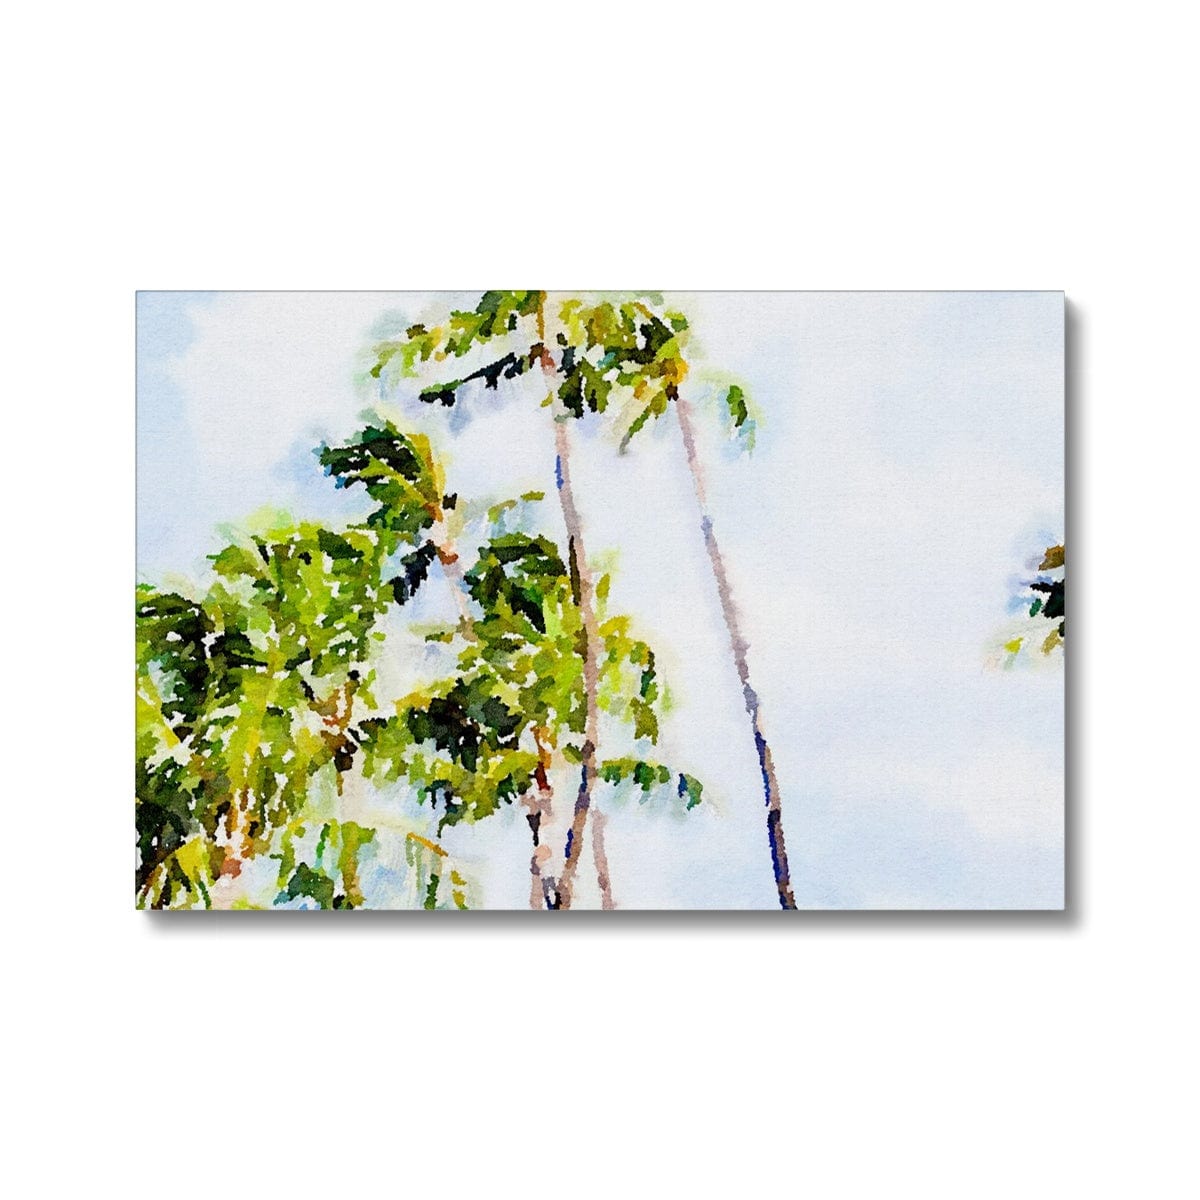 Seek & Ramble Canvas 12"x8" (30.48x20.32cm) / Image Wrap Watercolour Palm Trees Eco Canvas